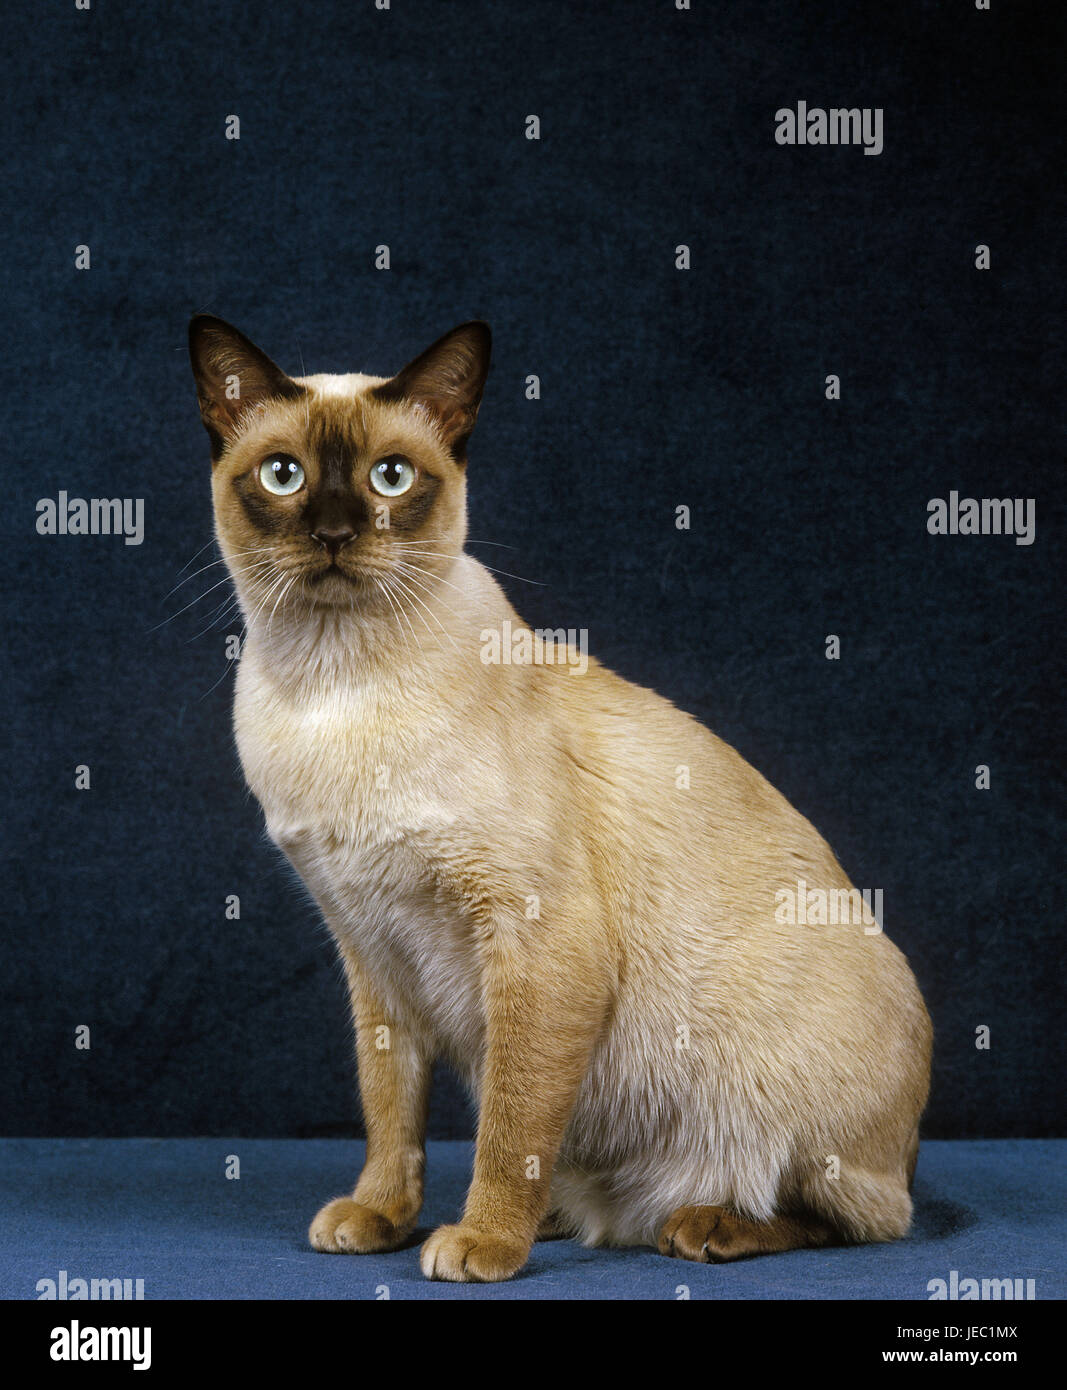 Tonkanesen cat before blue background, Stock Photo